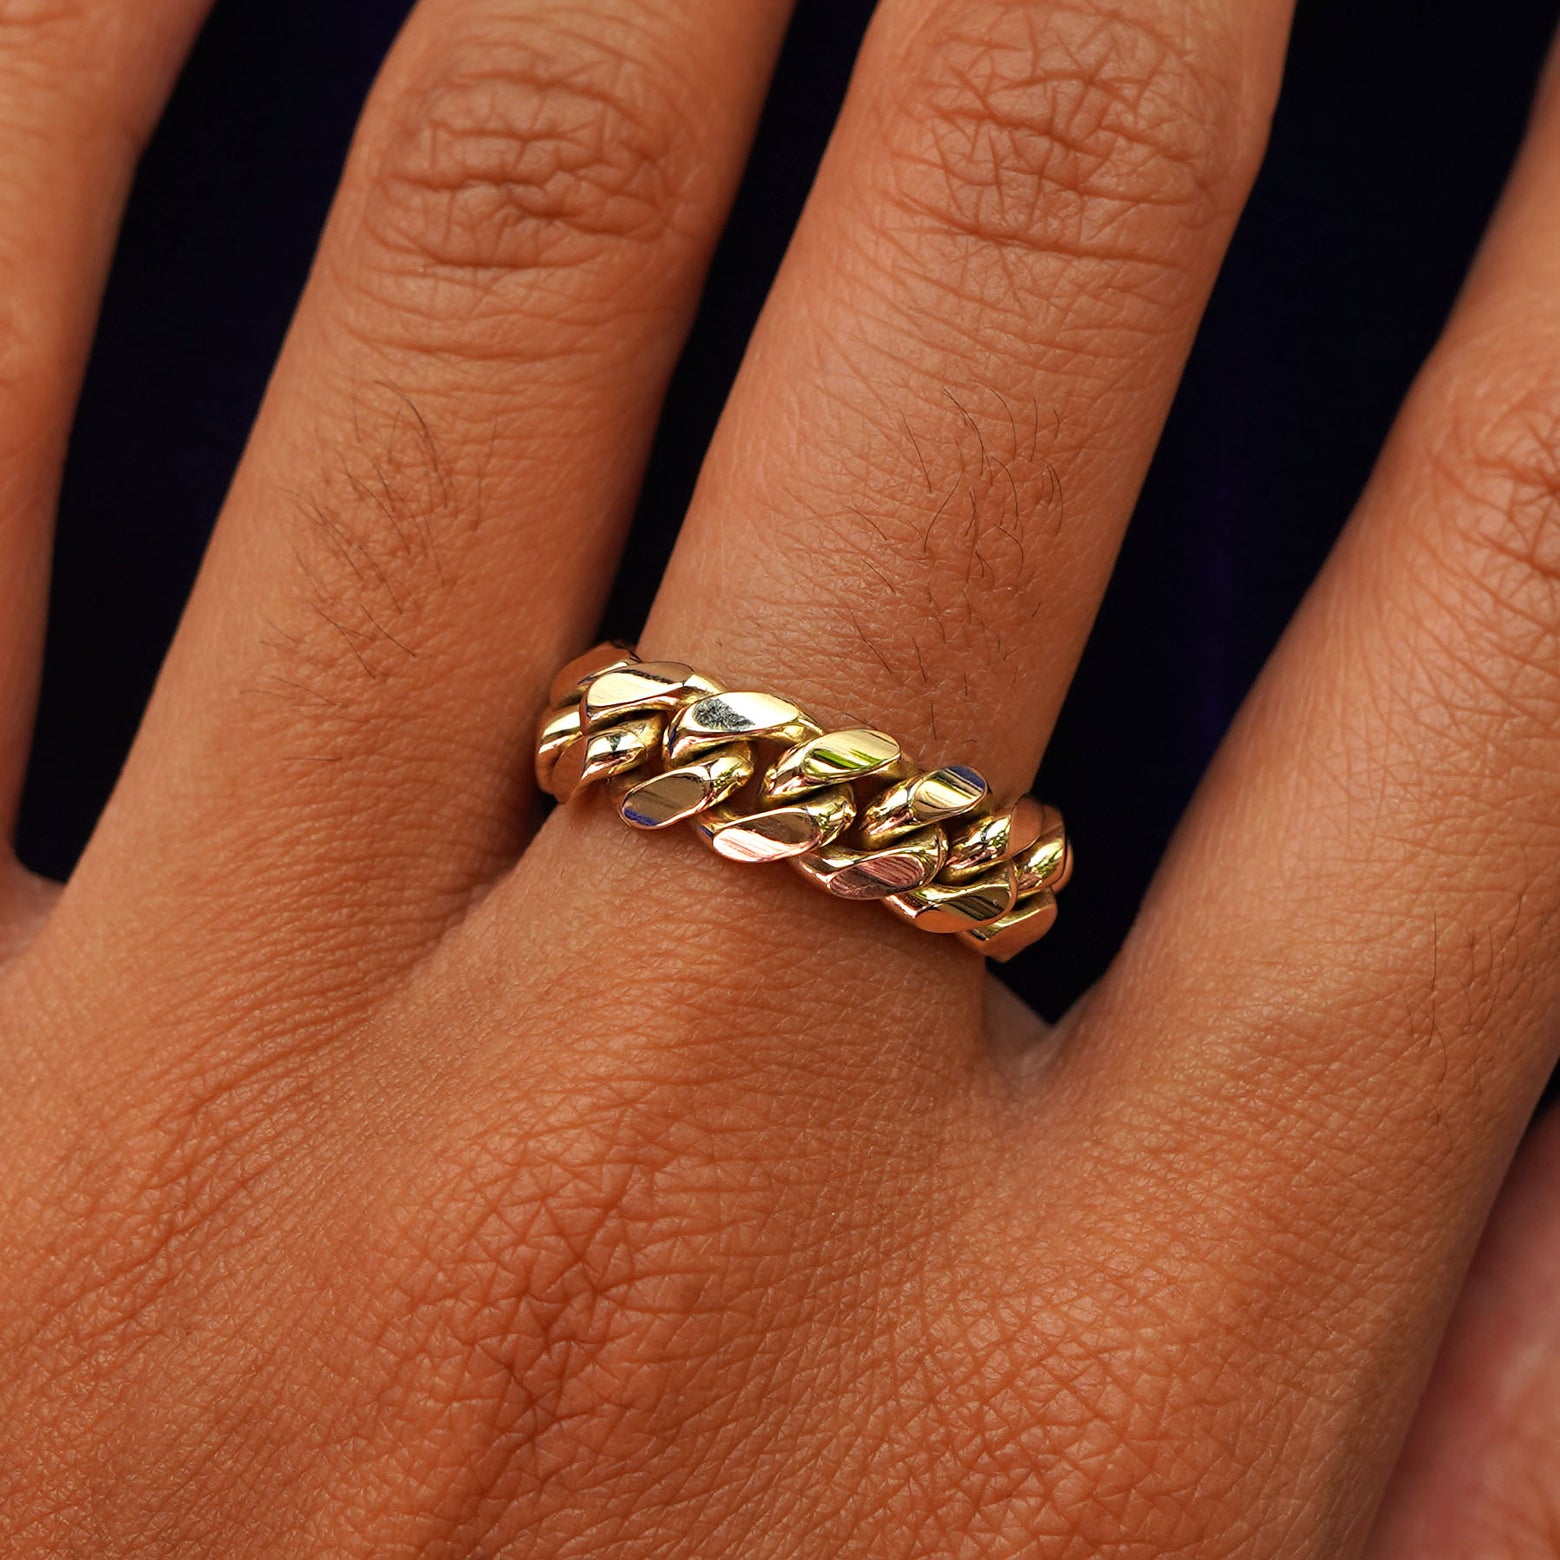 A model's hand wearing a 14 karat gold Miami Cuban Ring